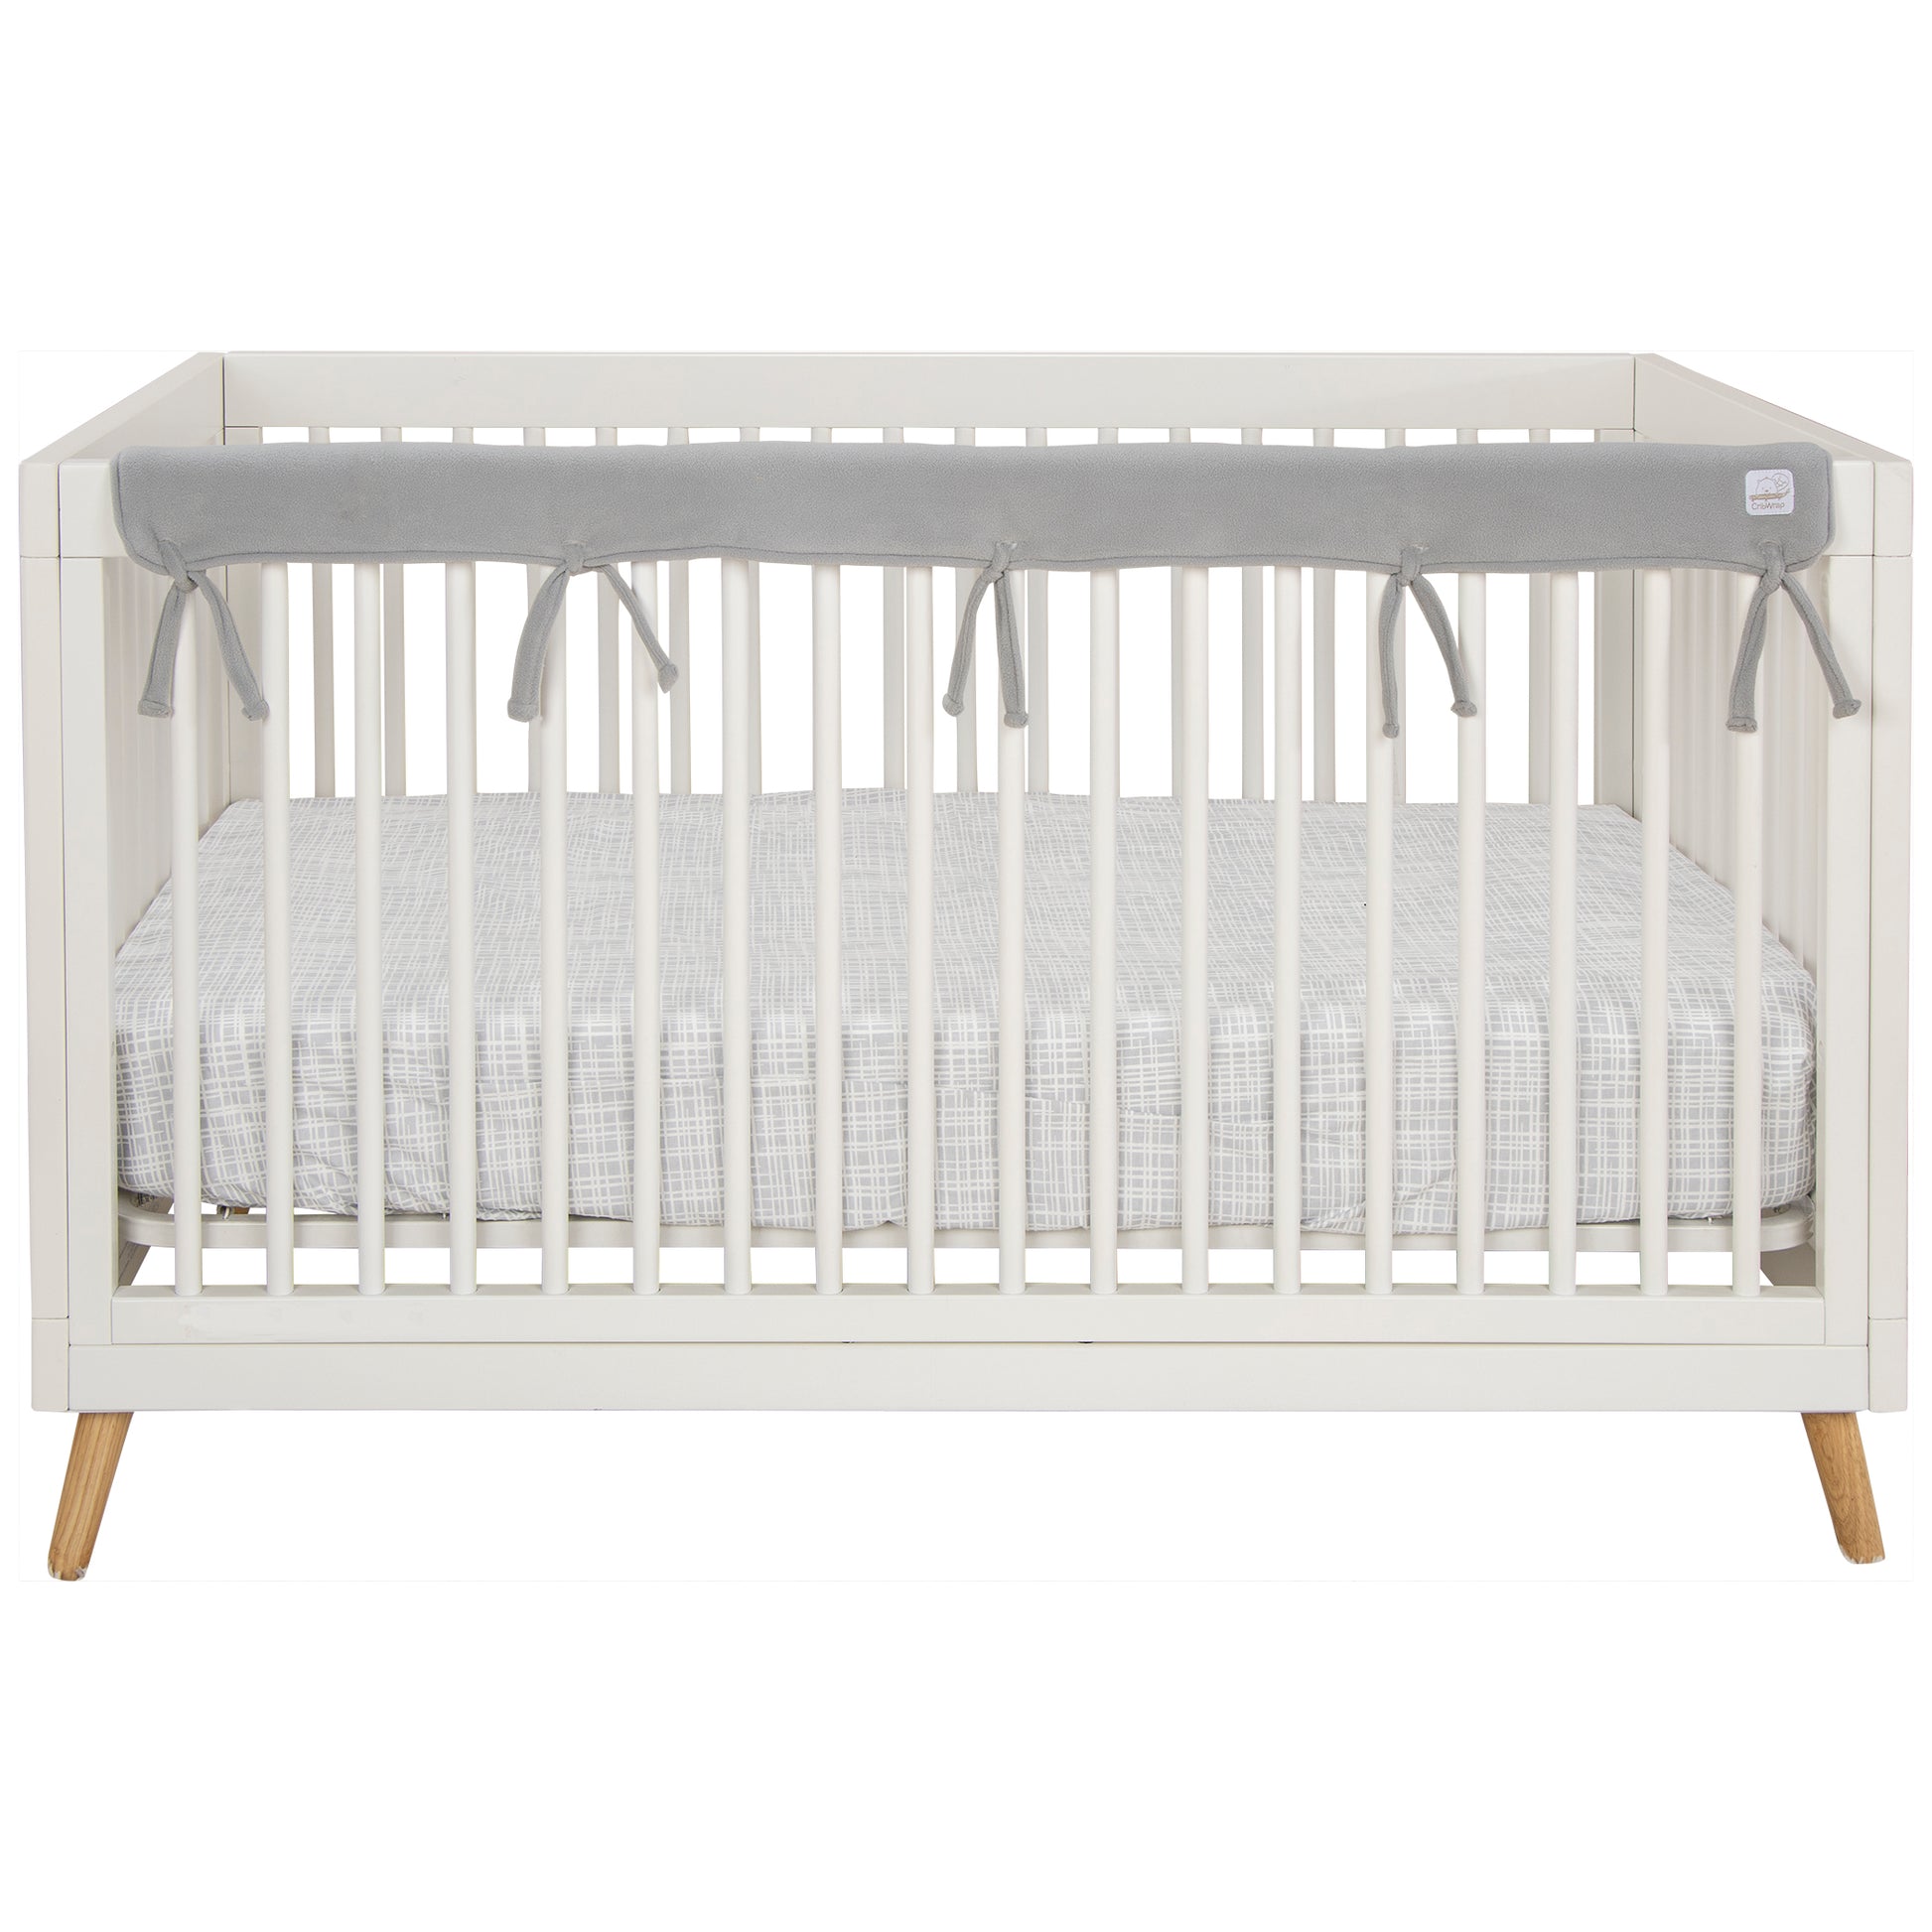 CribWrap® Narrow 1 Long Gray Fleece Rail Cover on a white crib